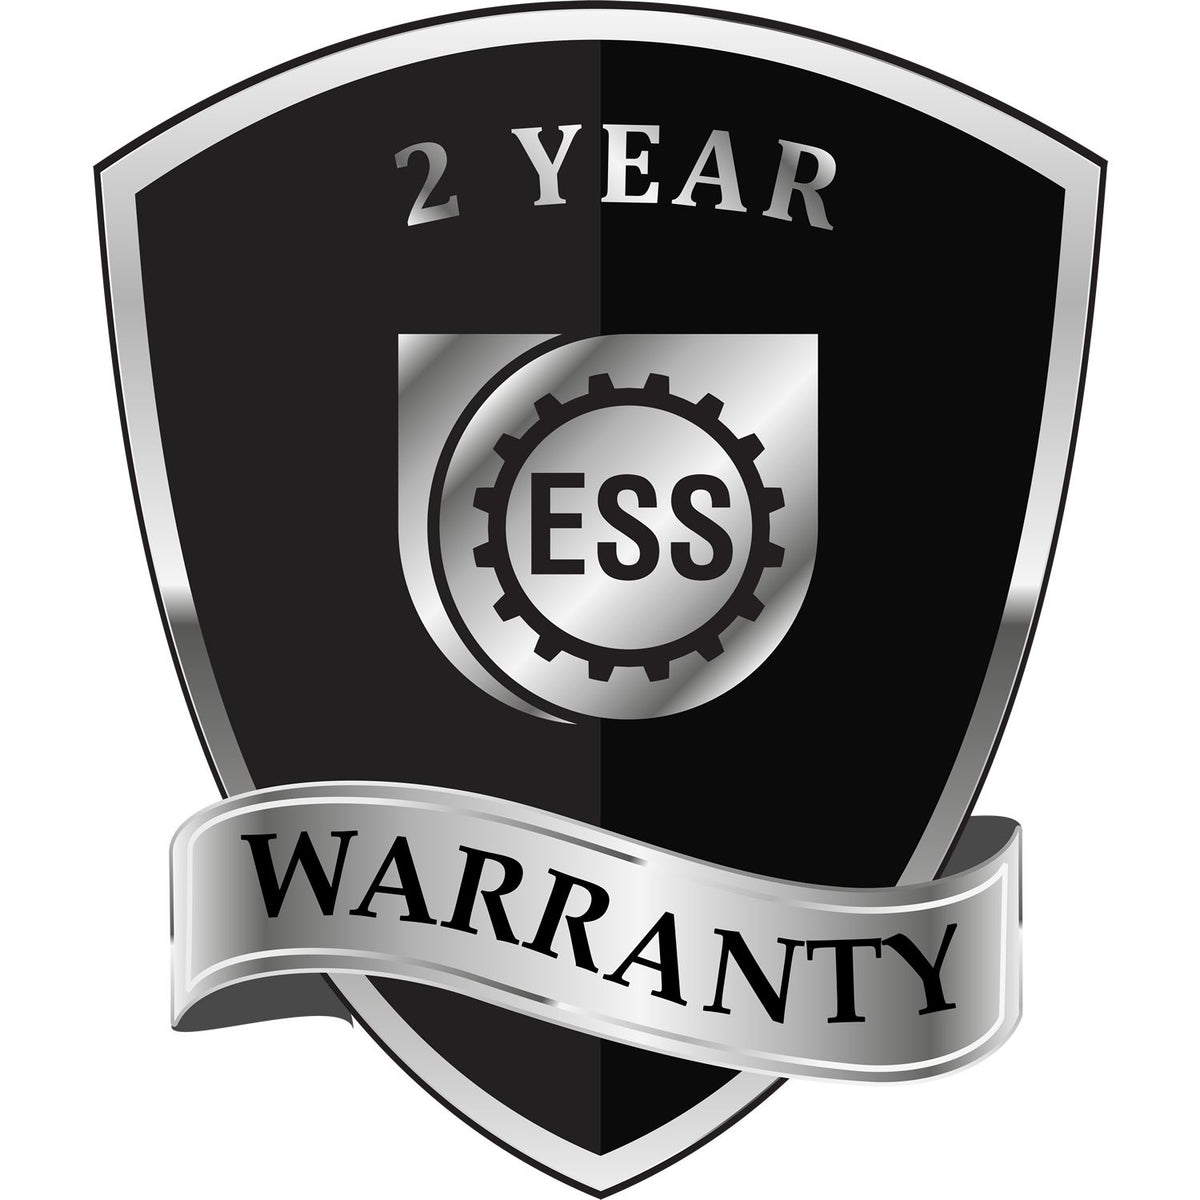 A black and silver badge or emblem showing warranty information for the Gift South Carolina Land Surveyor Seal